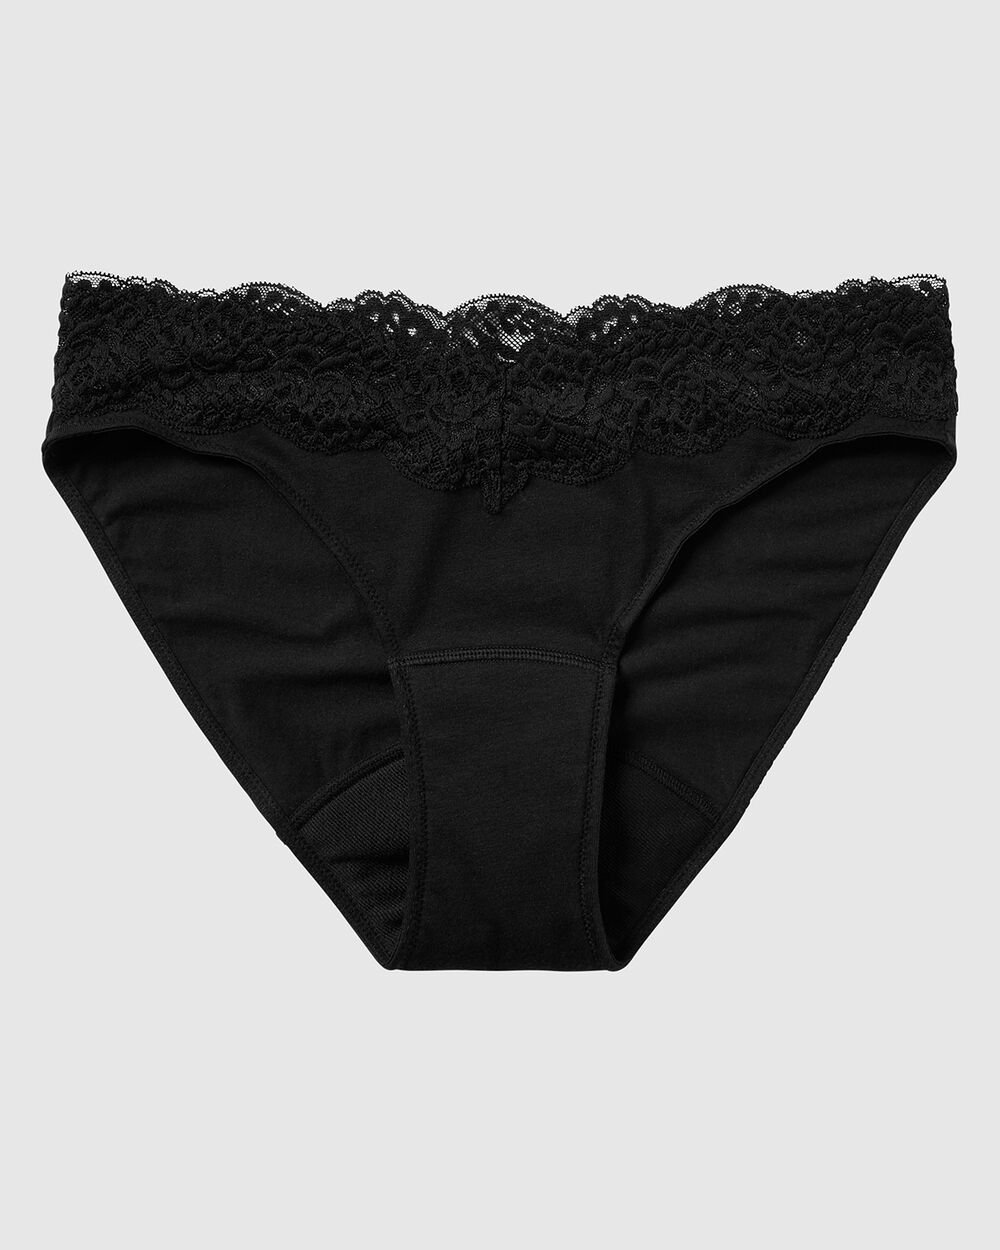 Period, Panties, Underwear, Lace